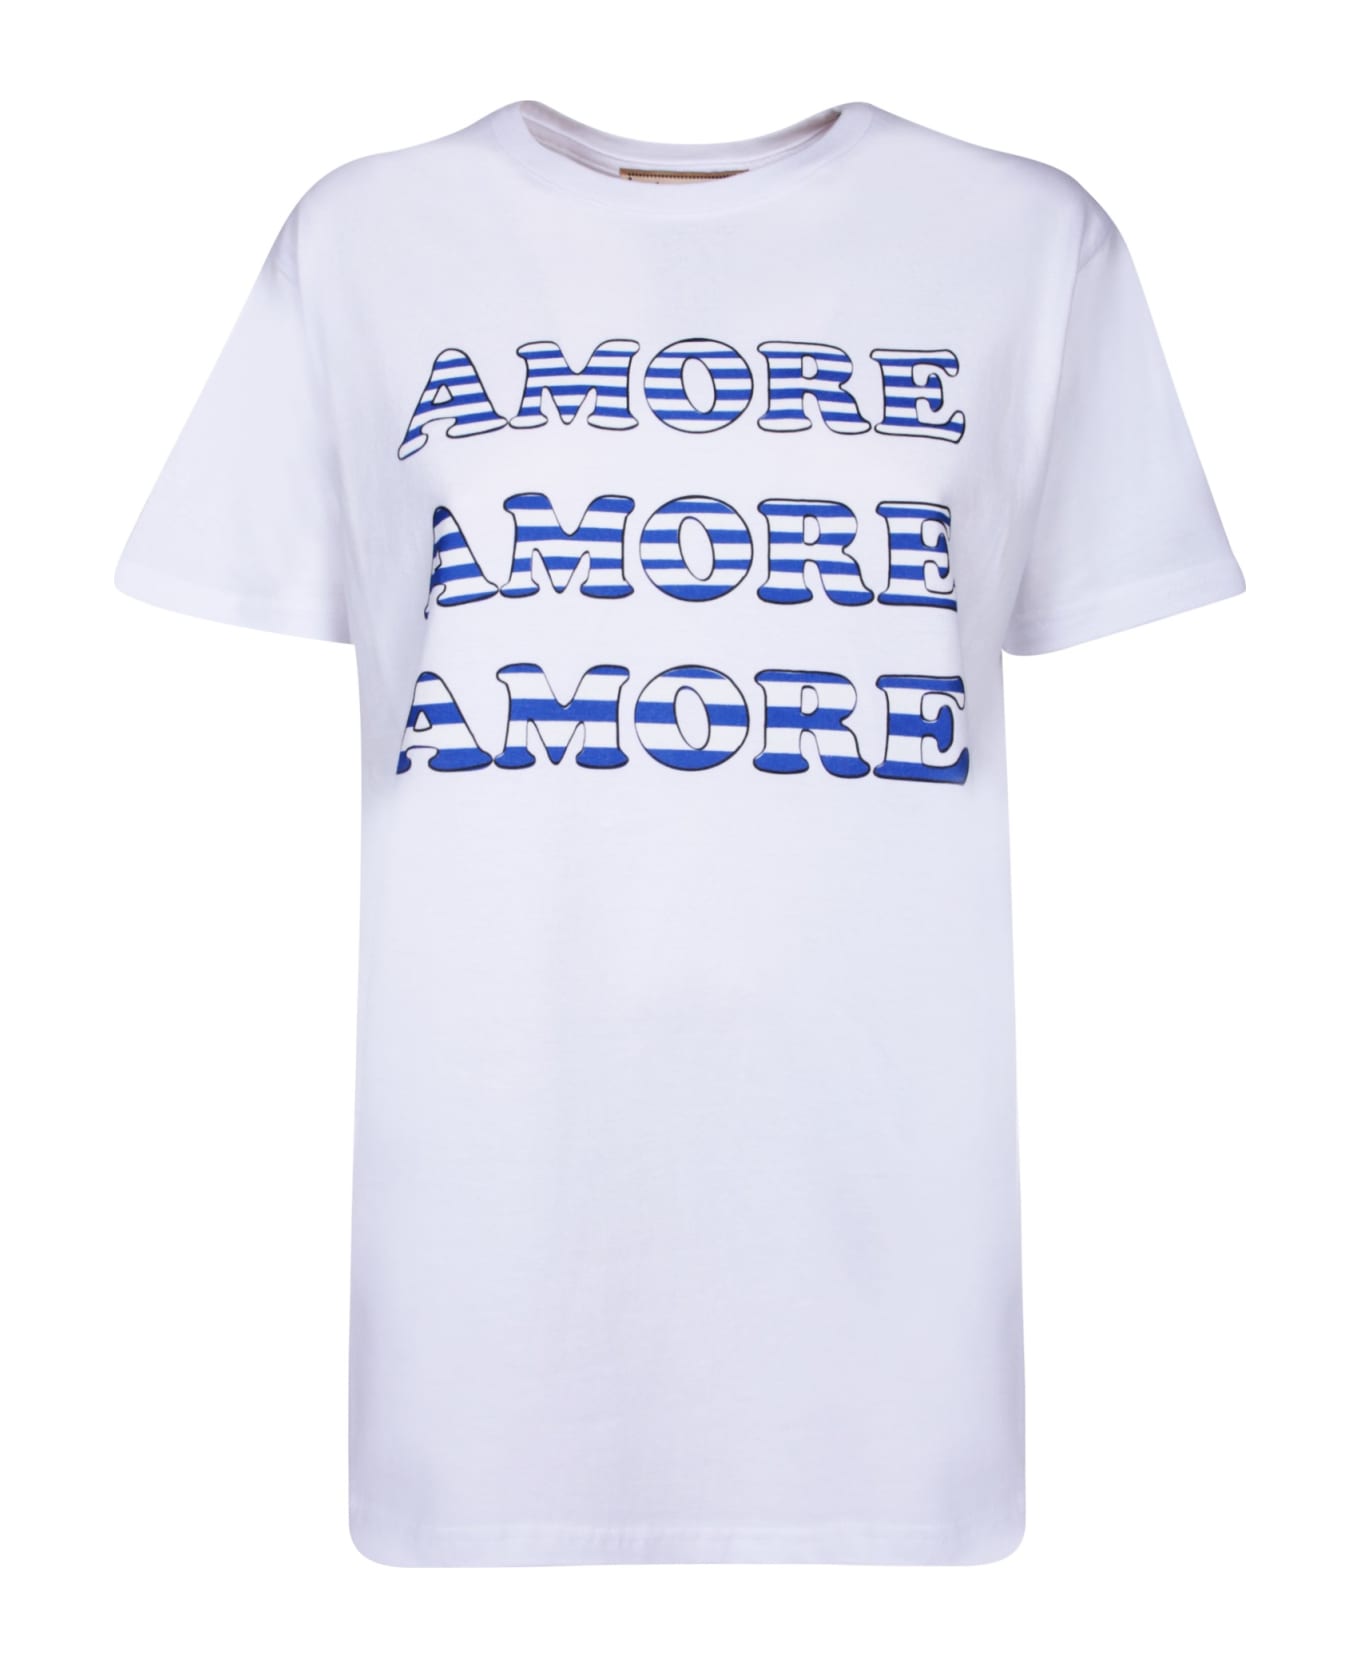 Alessandro Enriquez Amore White Blue T-shirt - White